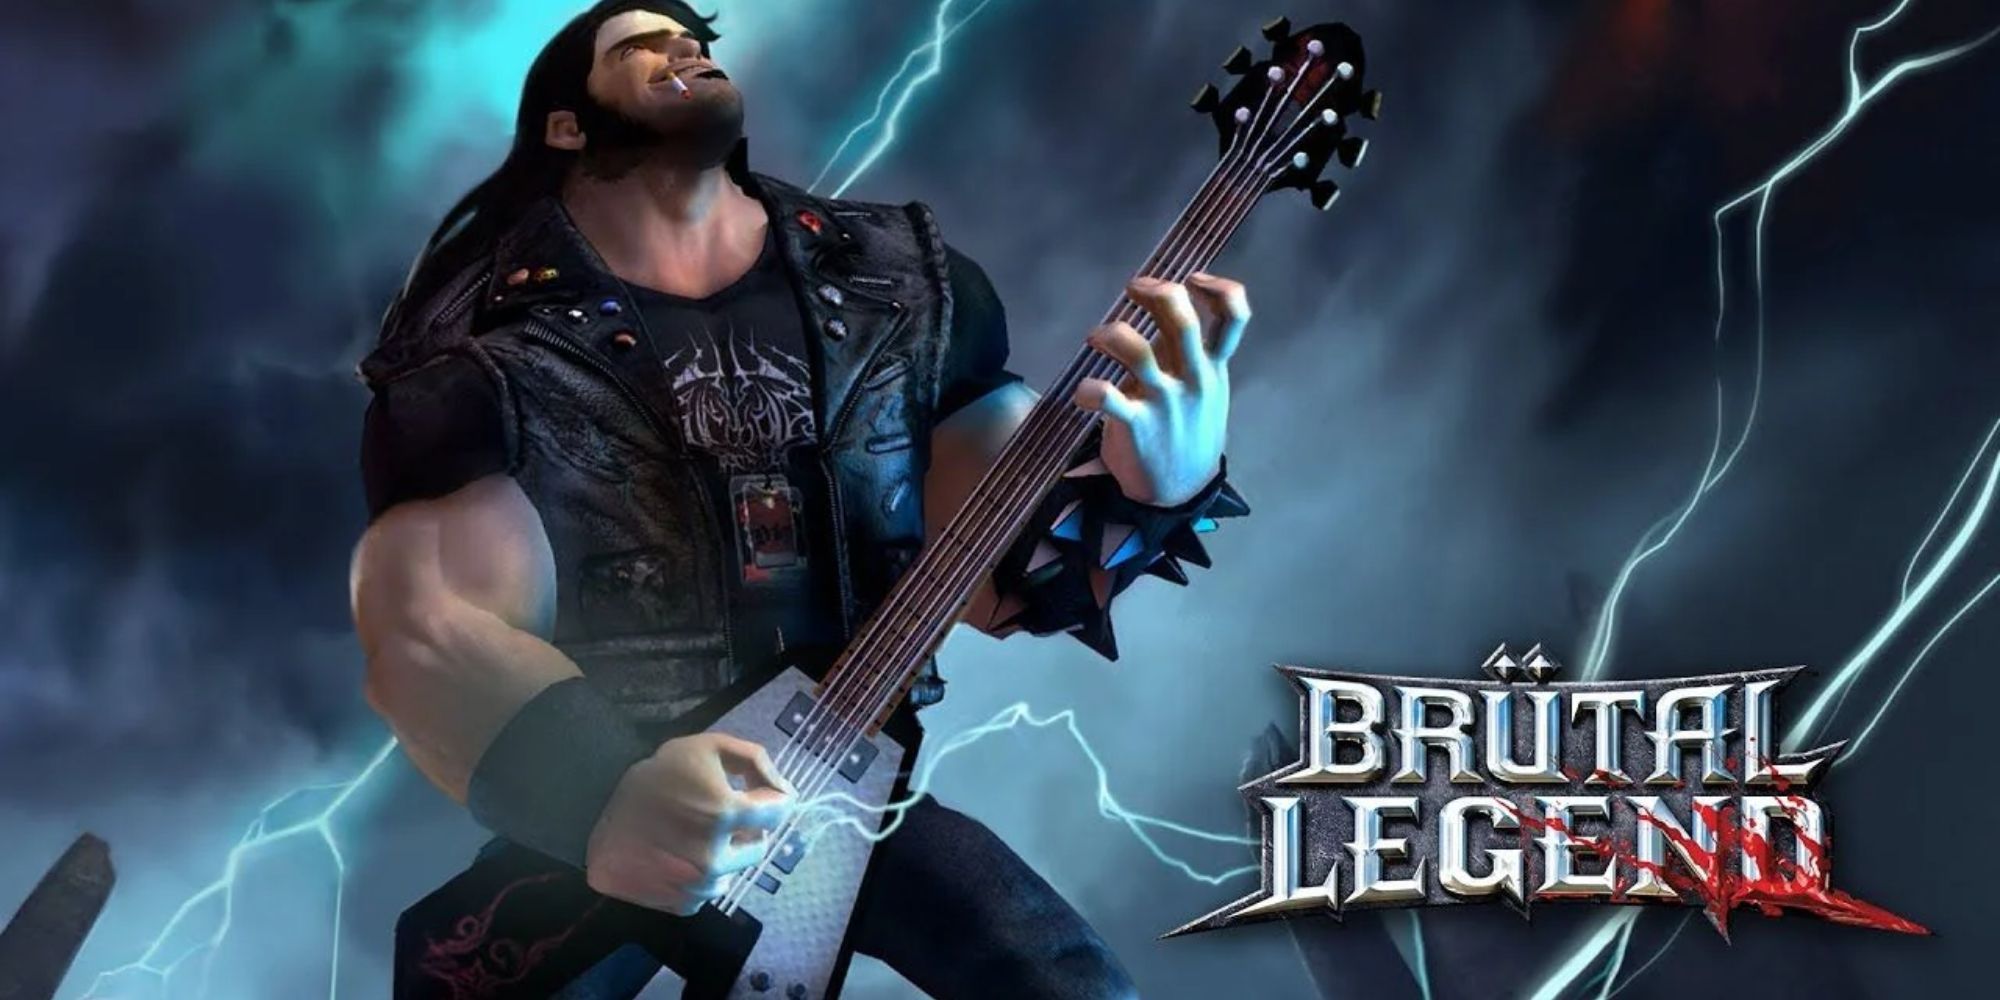 Brutal Legend game art featuring Eddie (voiced by Jack Black)